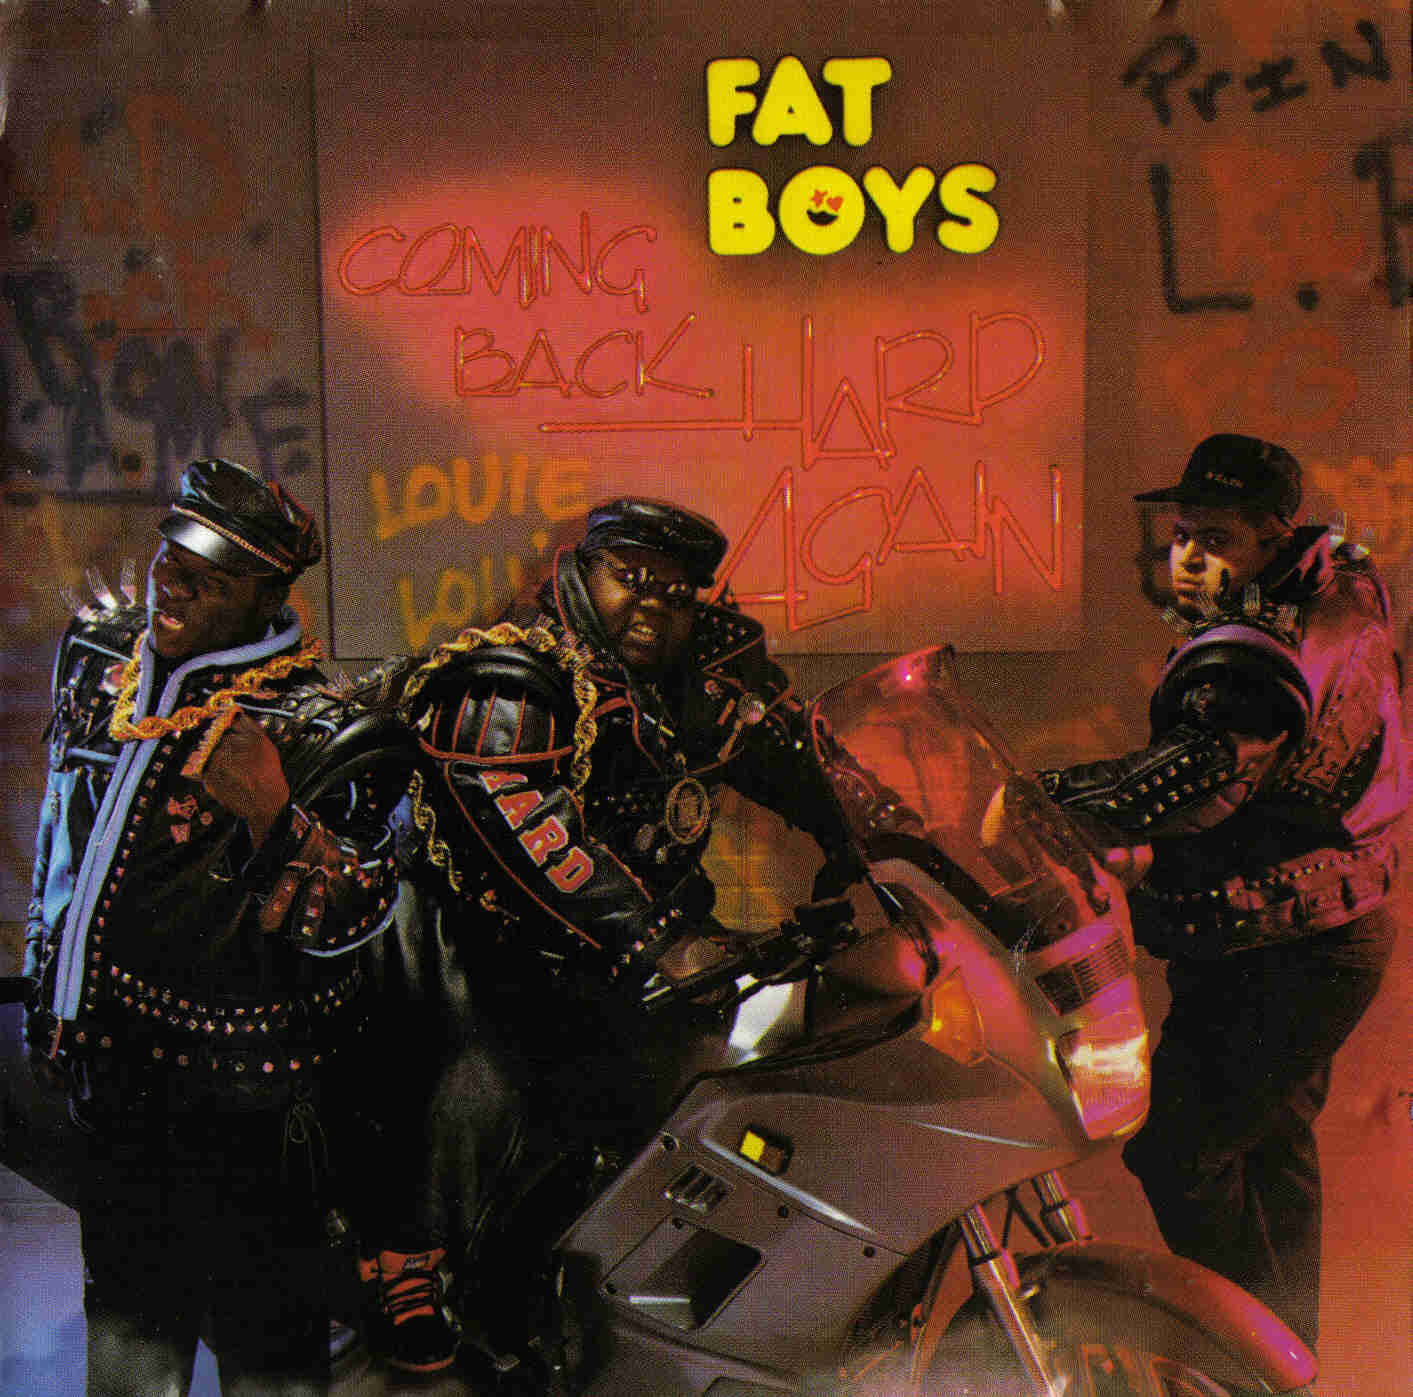 http://2.bp.blogspot.com/_lLpAsJyf_xg/S9_hpcvPlyI/AAAAAAAACfo/Q7v2ezu2Q_c/s1600/Fat+Boys+-+Coming+Back+Hard+Again+-+1988+-+NY.jpg